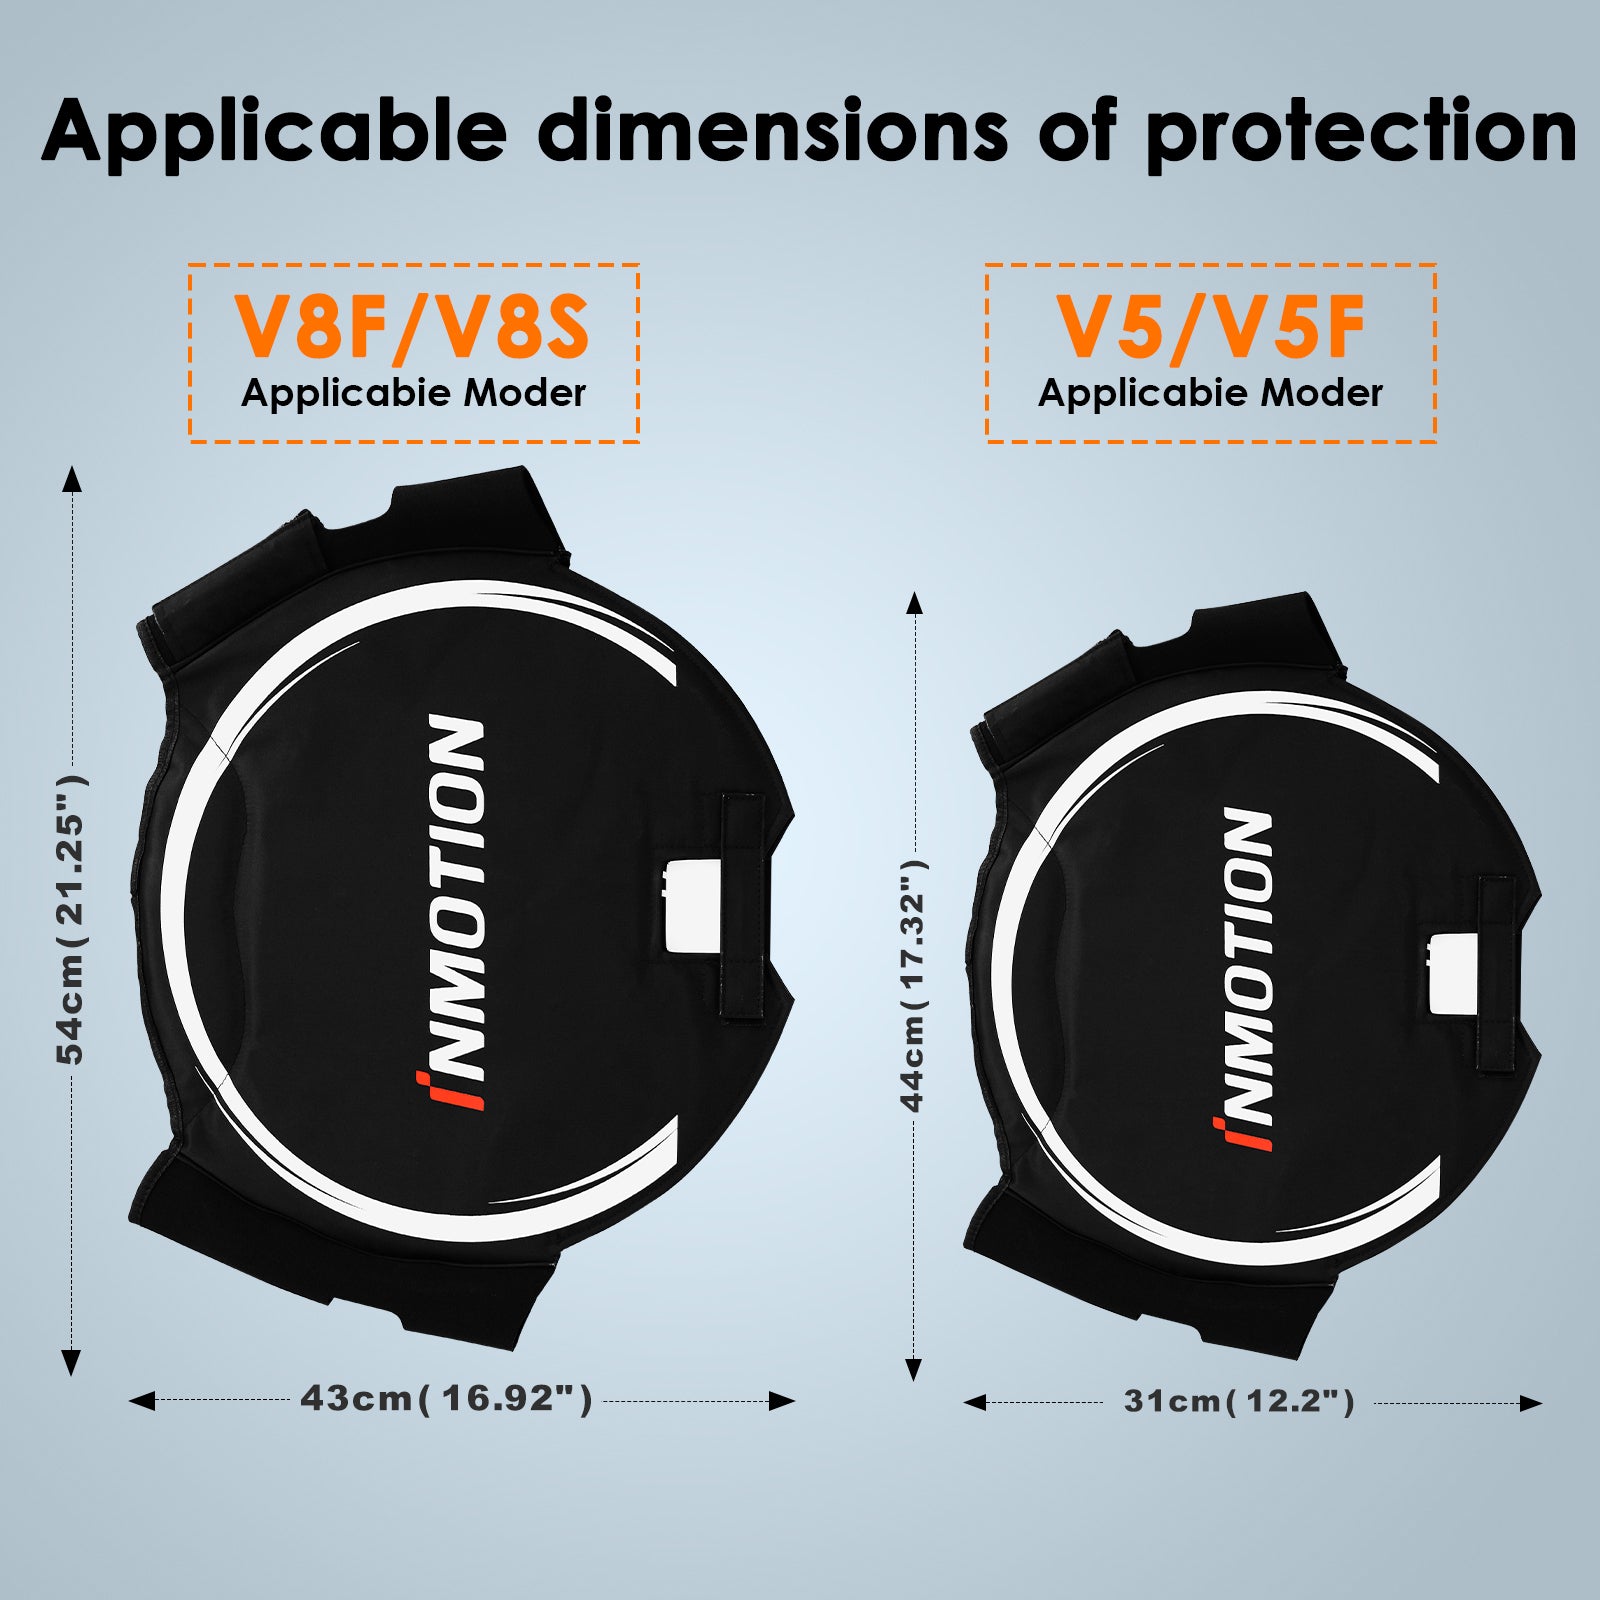 V5 Protective Cover